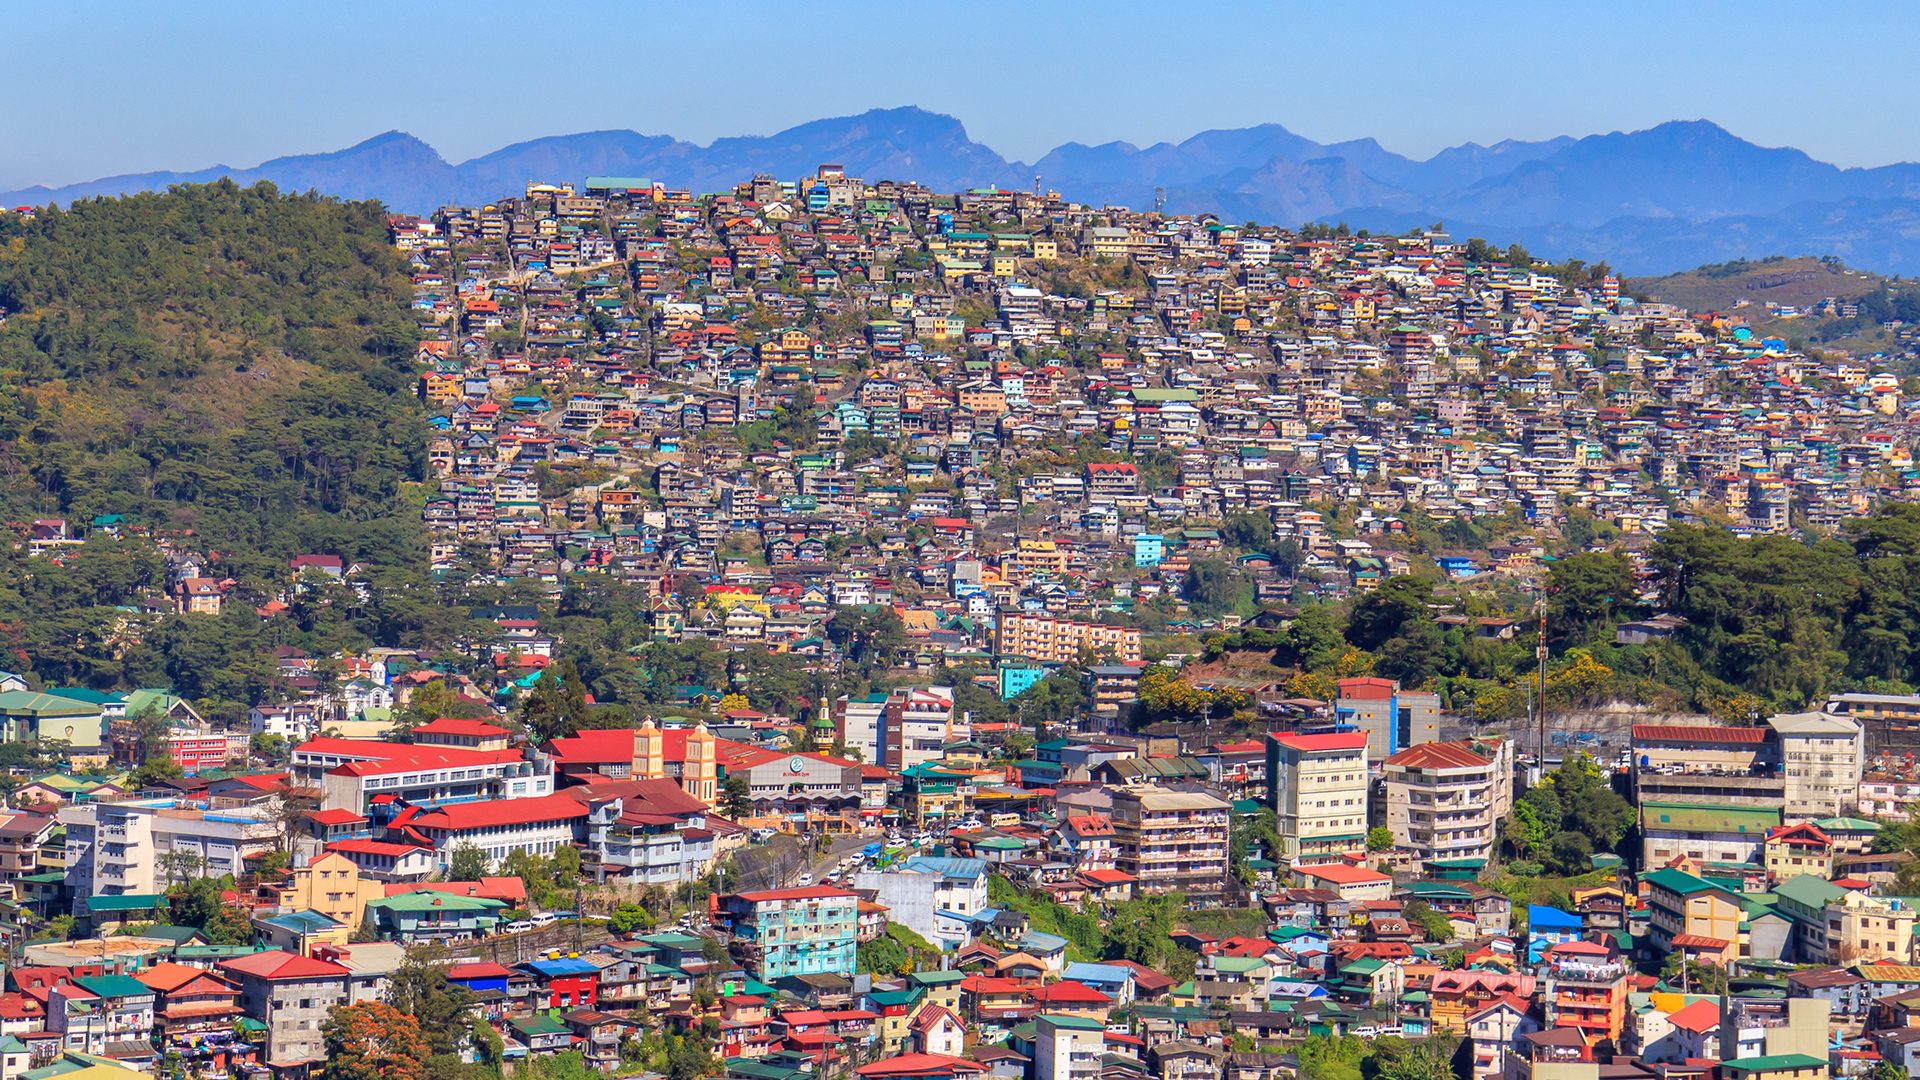 80% of Baguio’s buildings have no permits